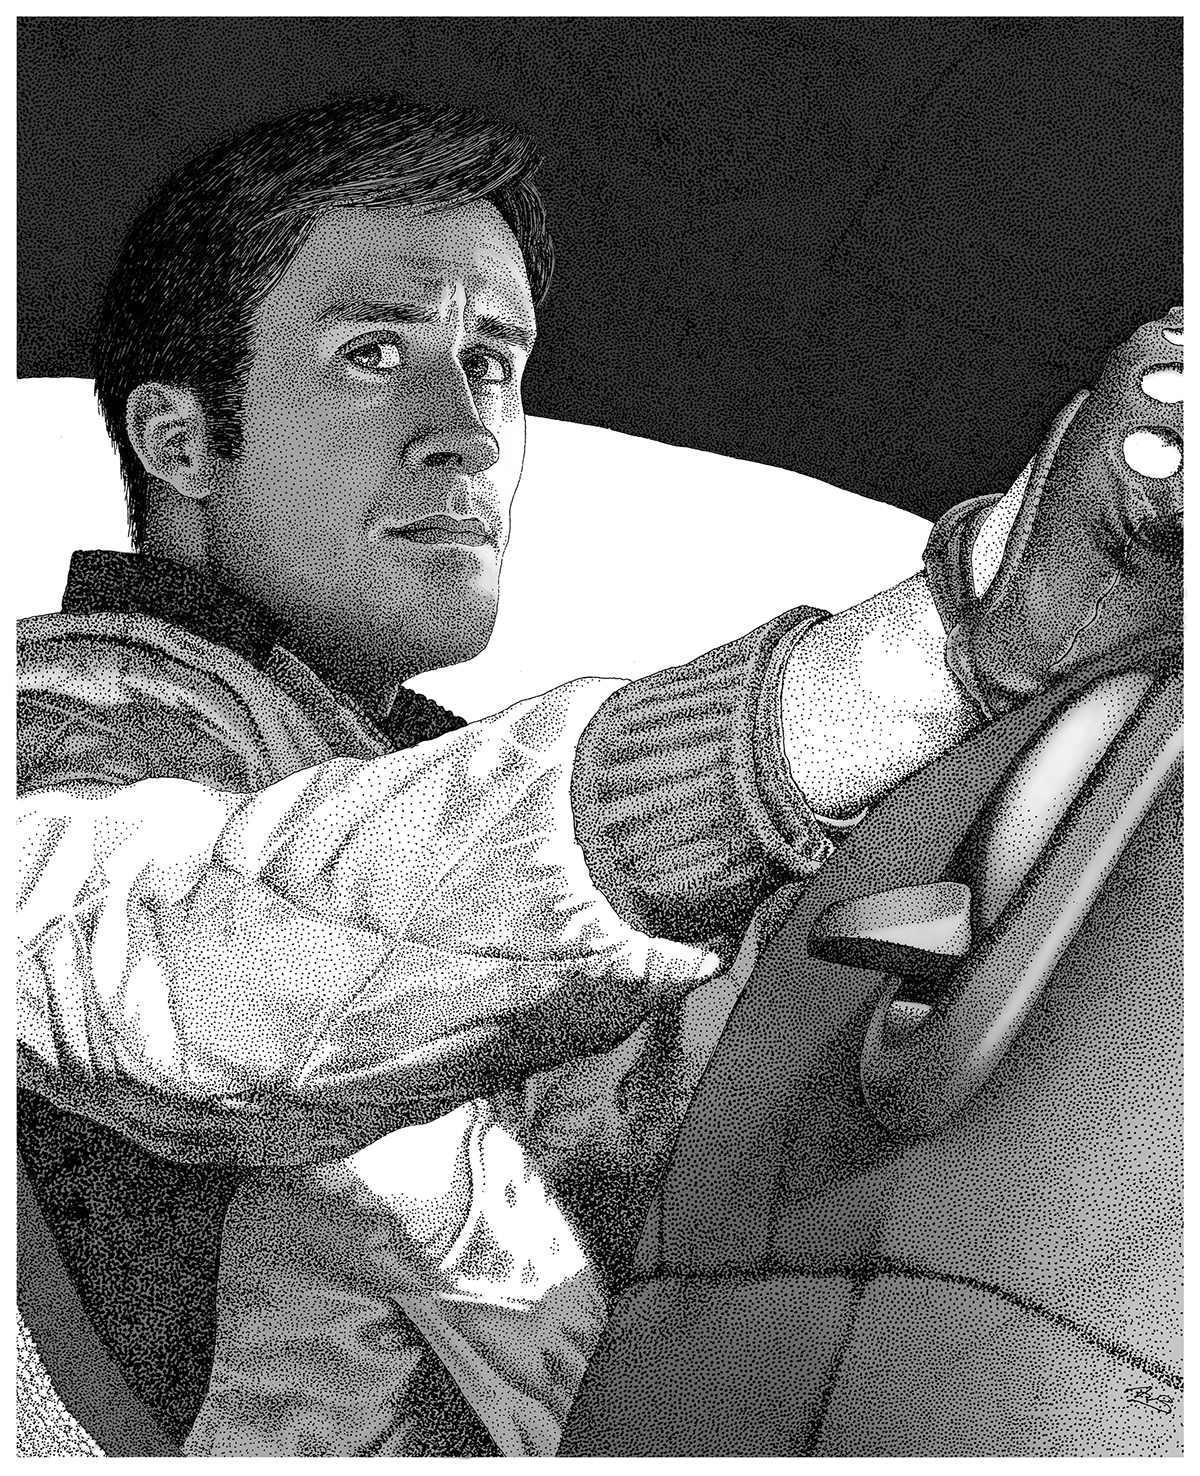 drive Ryan Gosling poster Nicolas Winding Refn driver L.A. movie stippling art draw dots ink artwork 80's